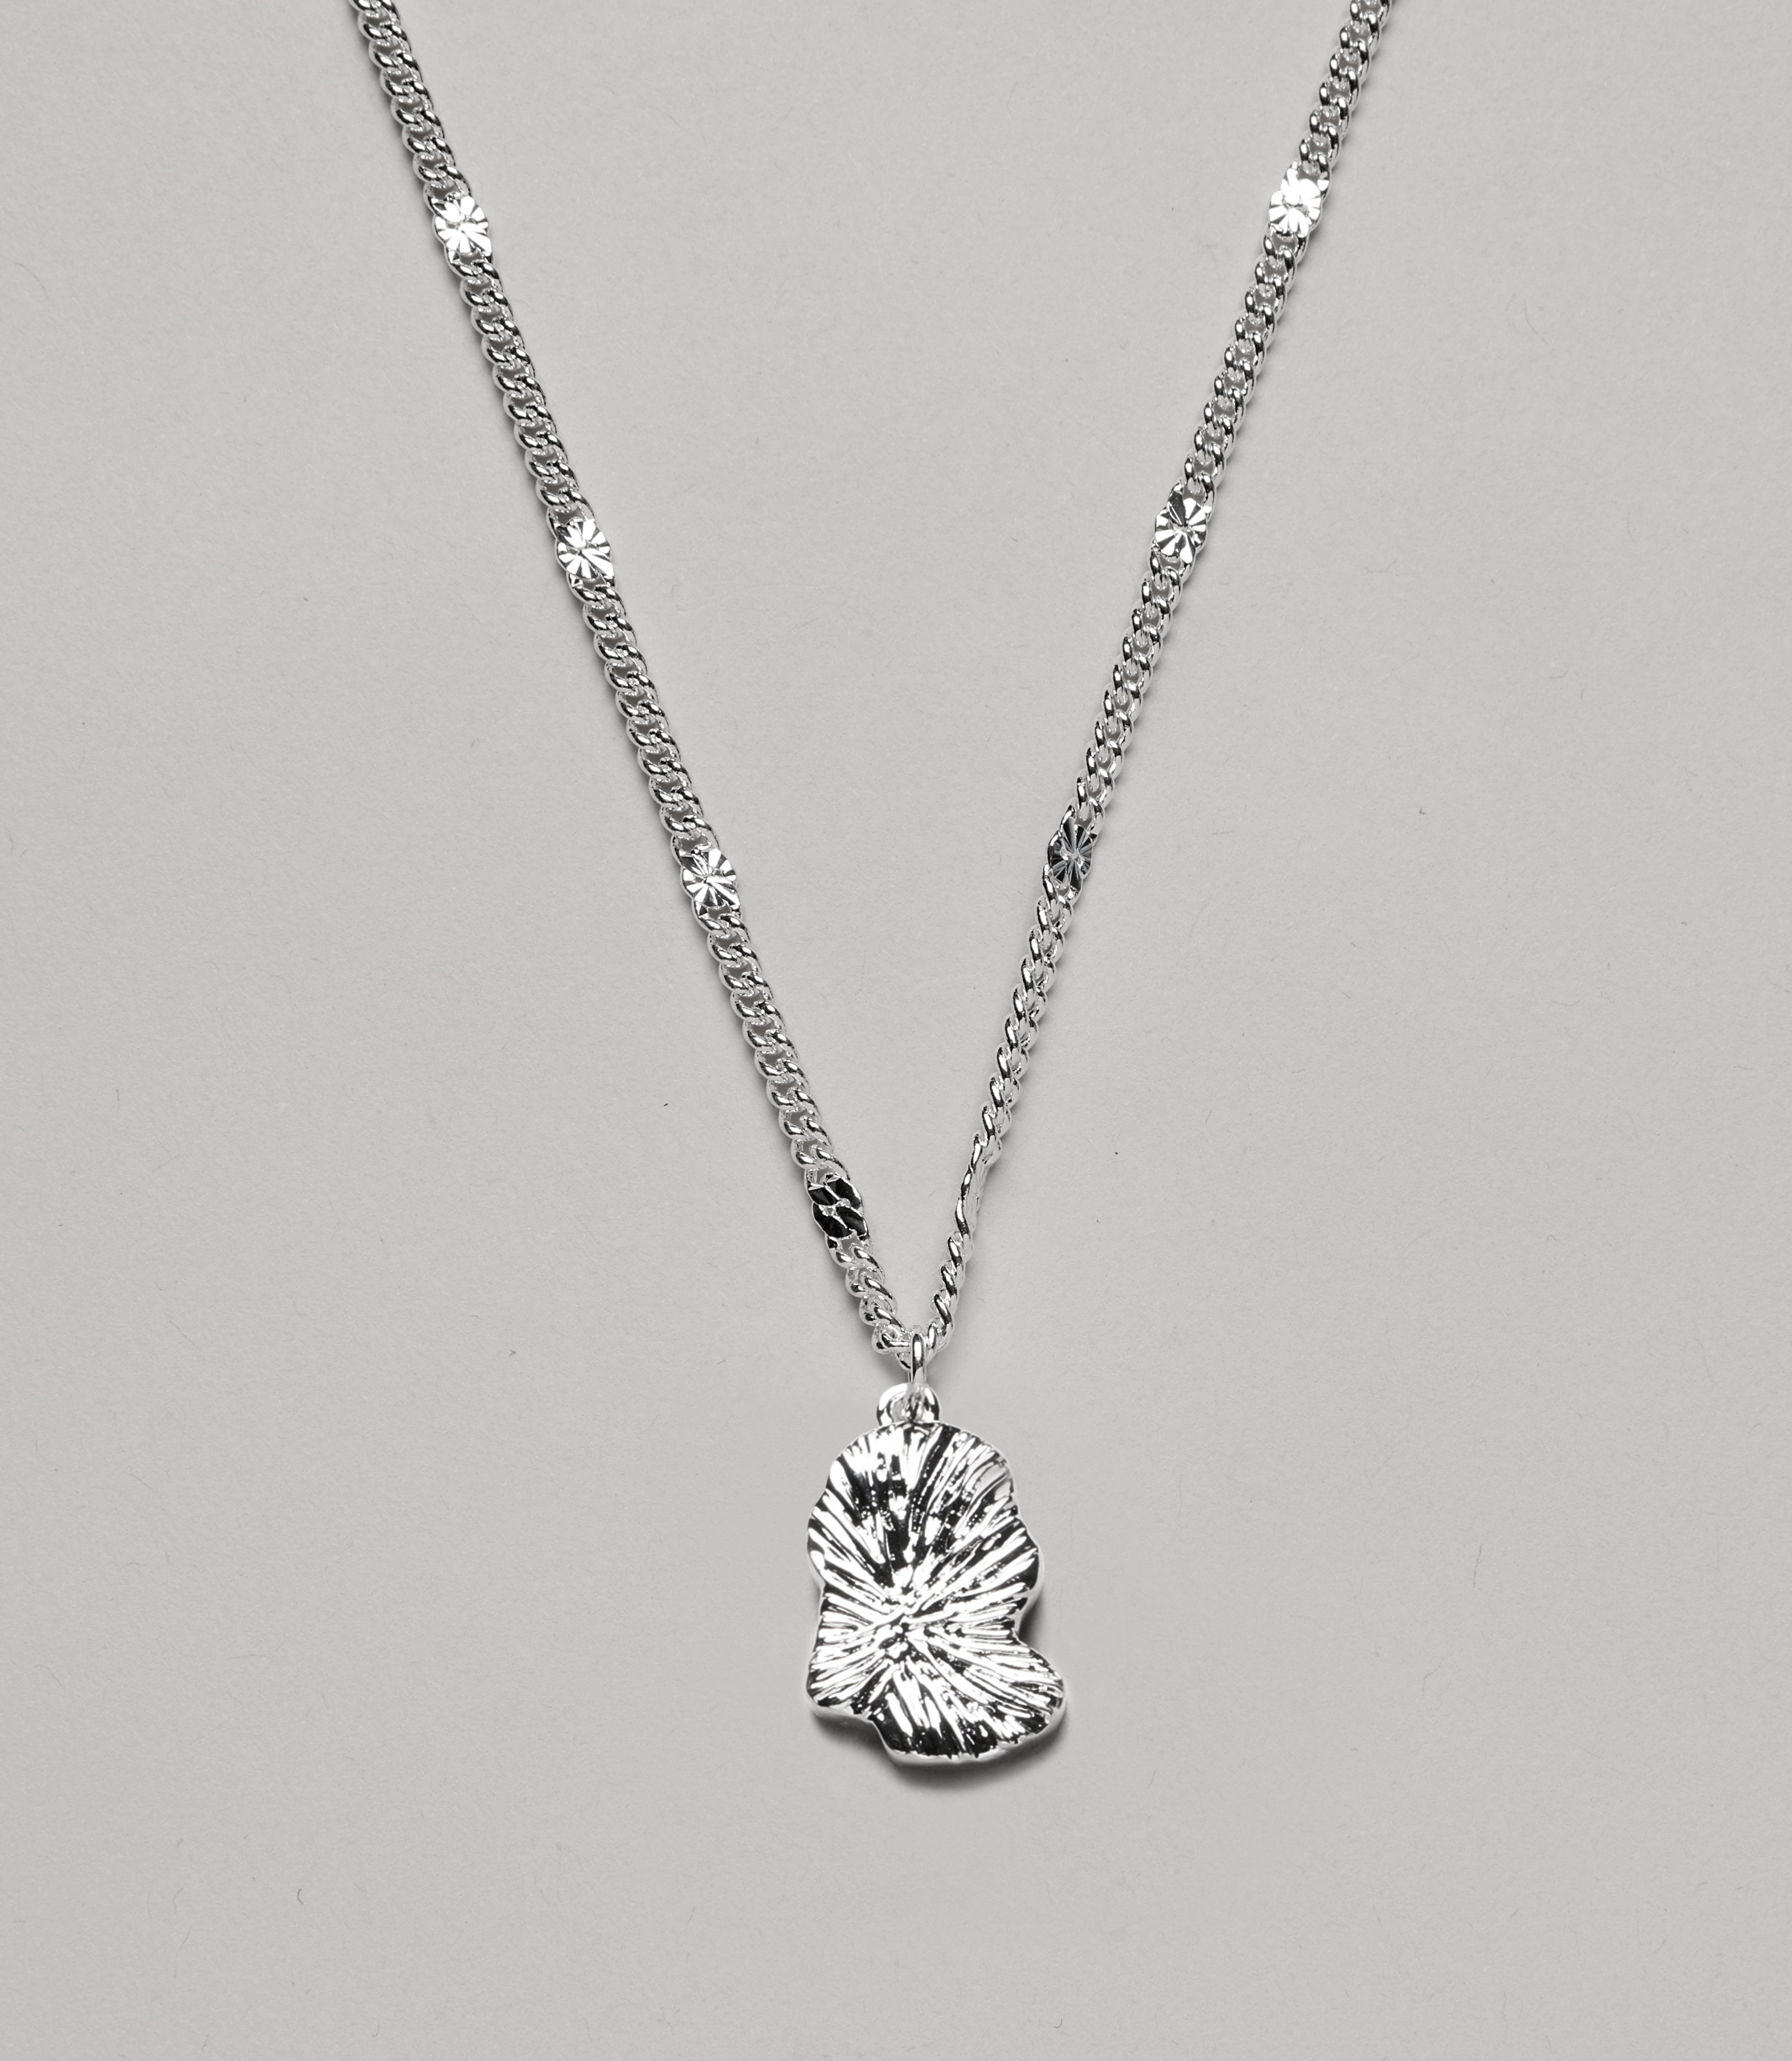 Fingerprint Necklace, 925S Sterling silver plated, 40 cm + 5 cm extender